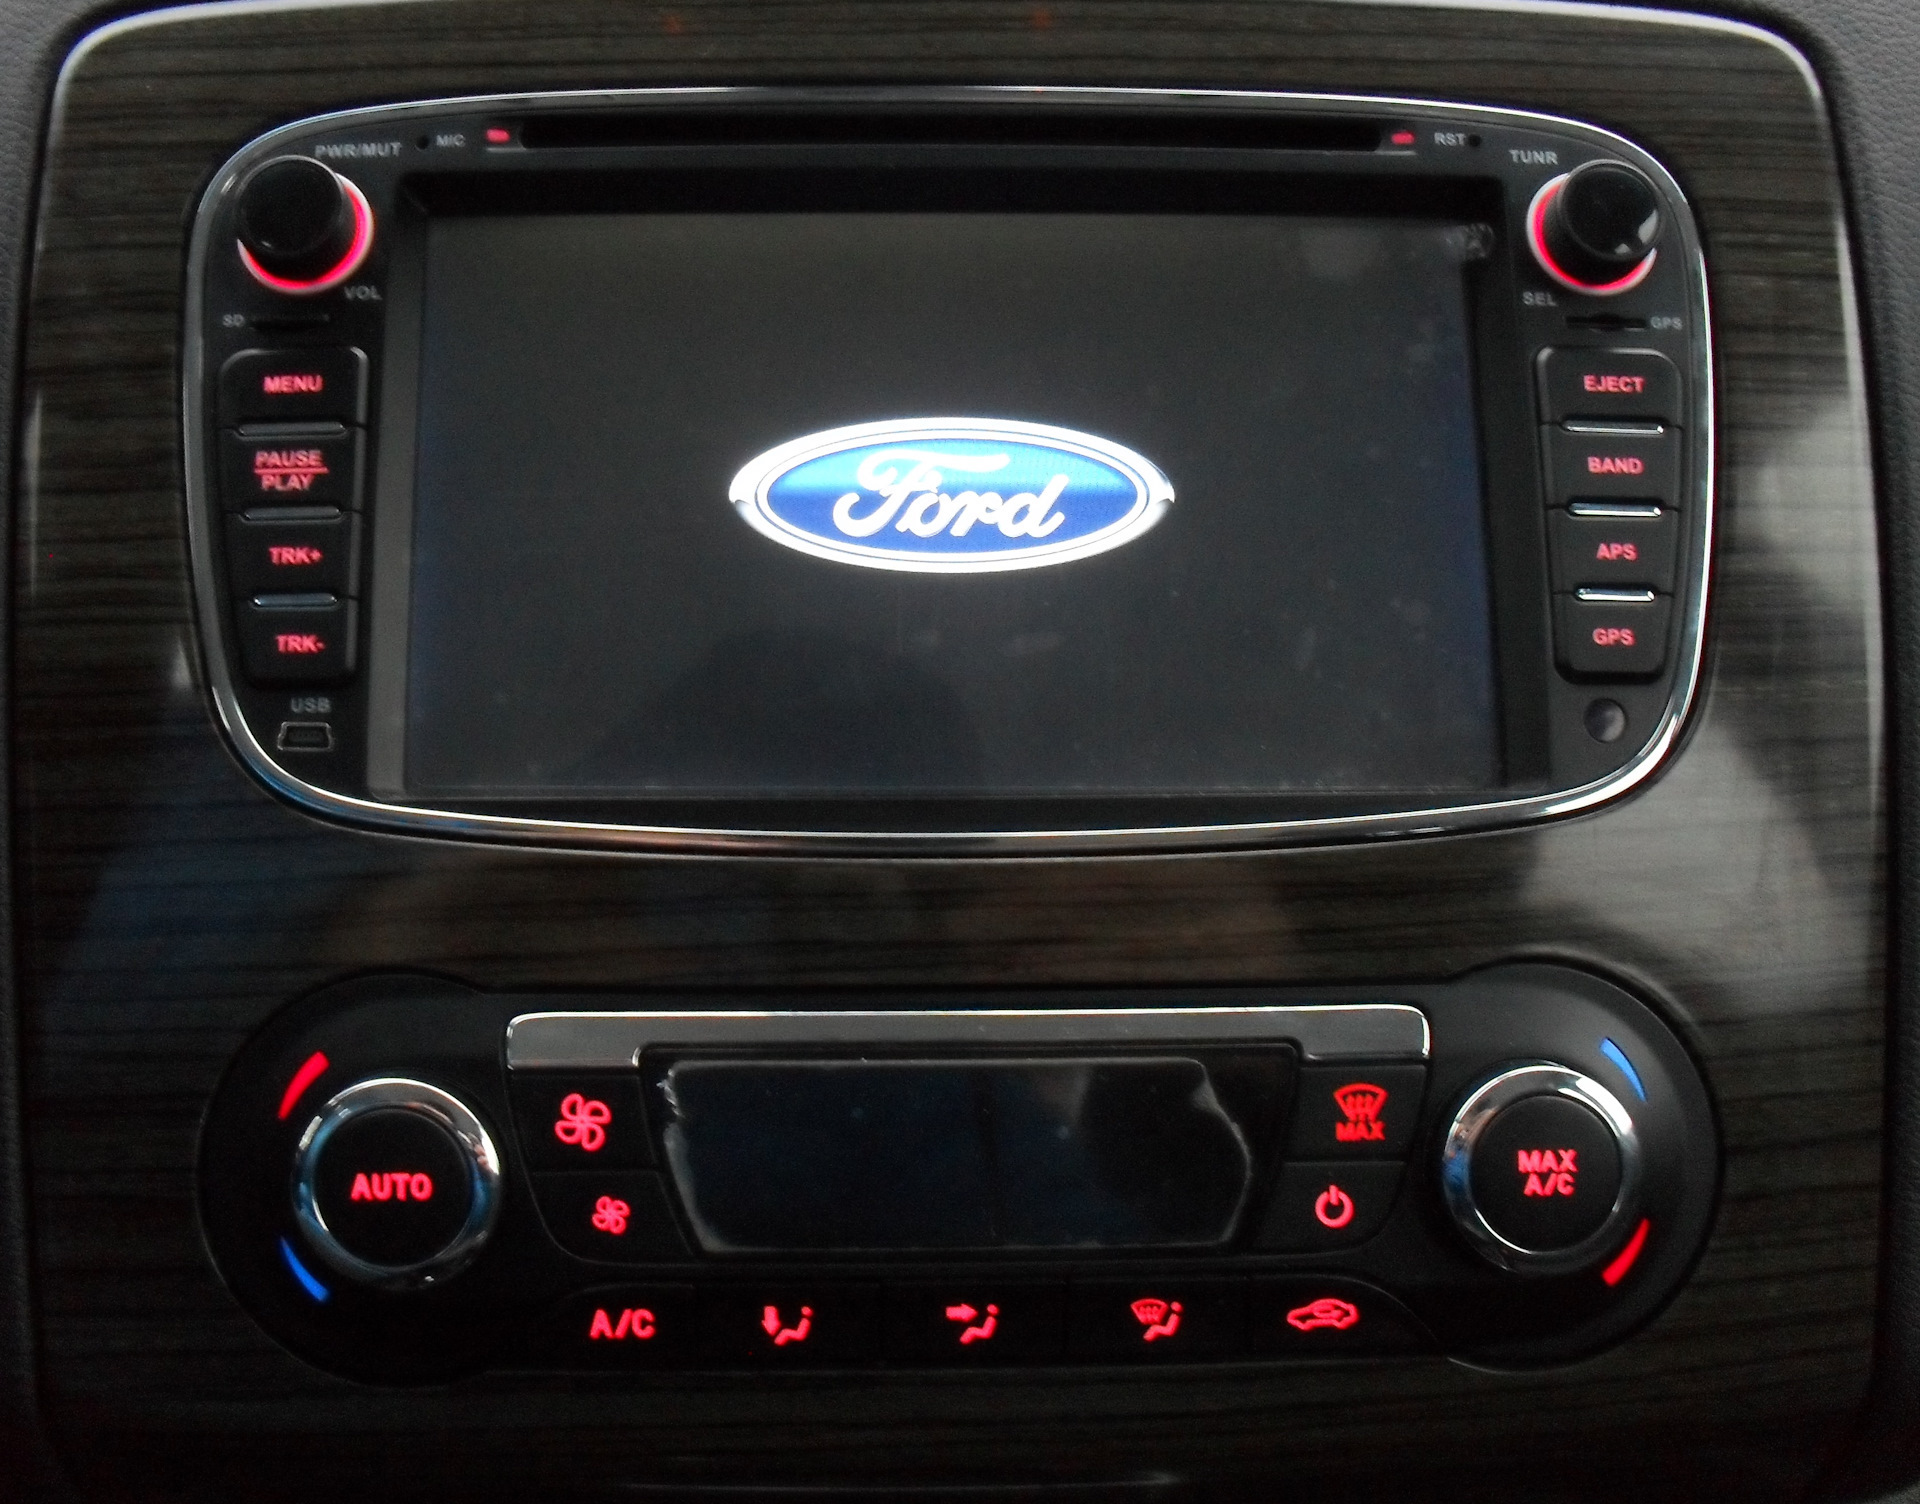 Магнитофон форд фокус. Штатная автомагнитола Форд фокус 2. Форд фокус 2 мультимедиа автомагнитола. Ford Focus 2 магнитола Android. Автомагнитола андроид Форд фокус 2.